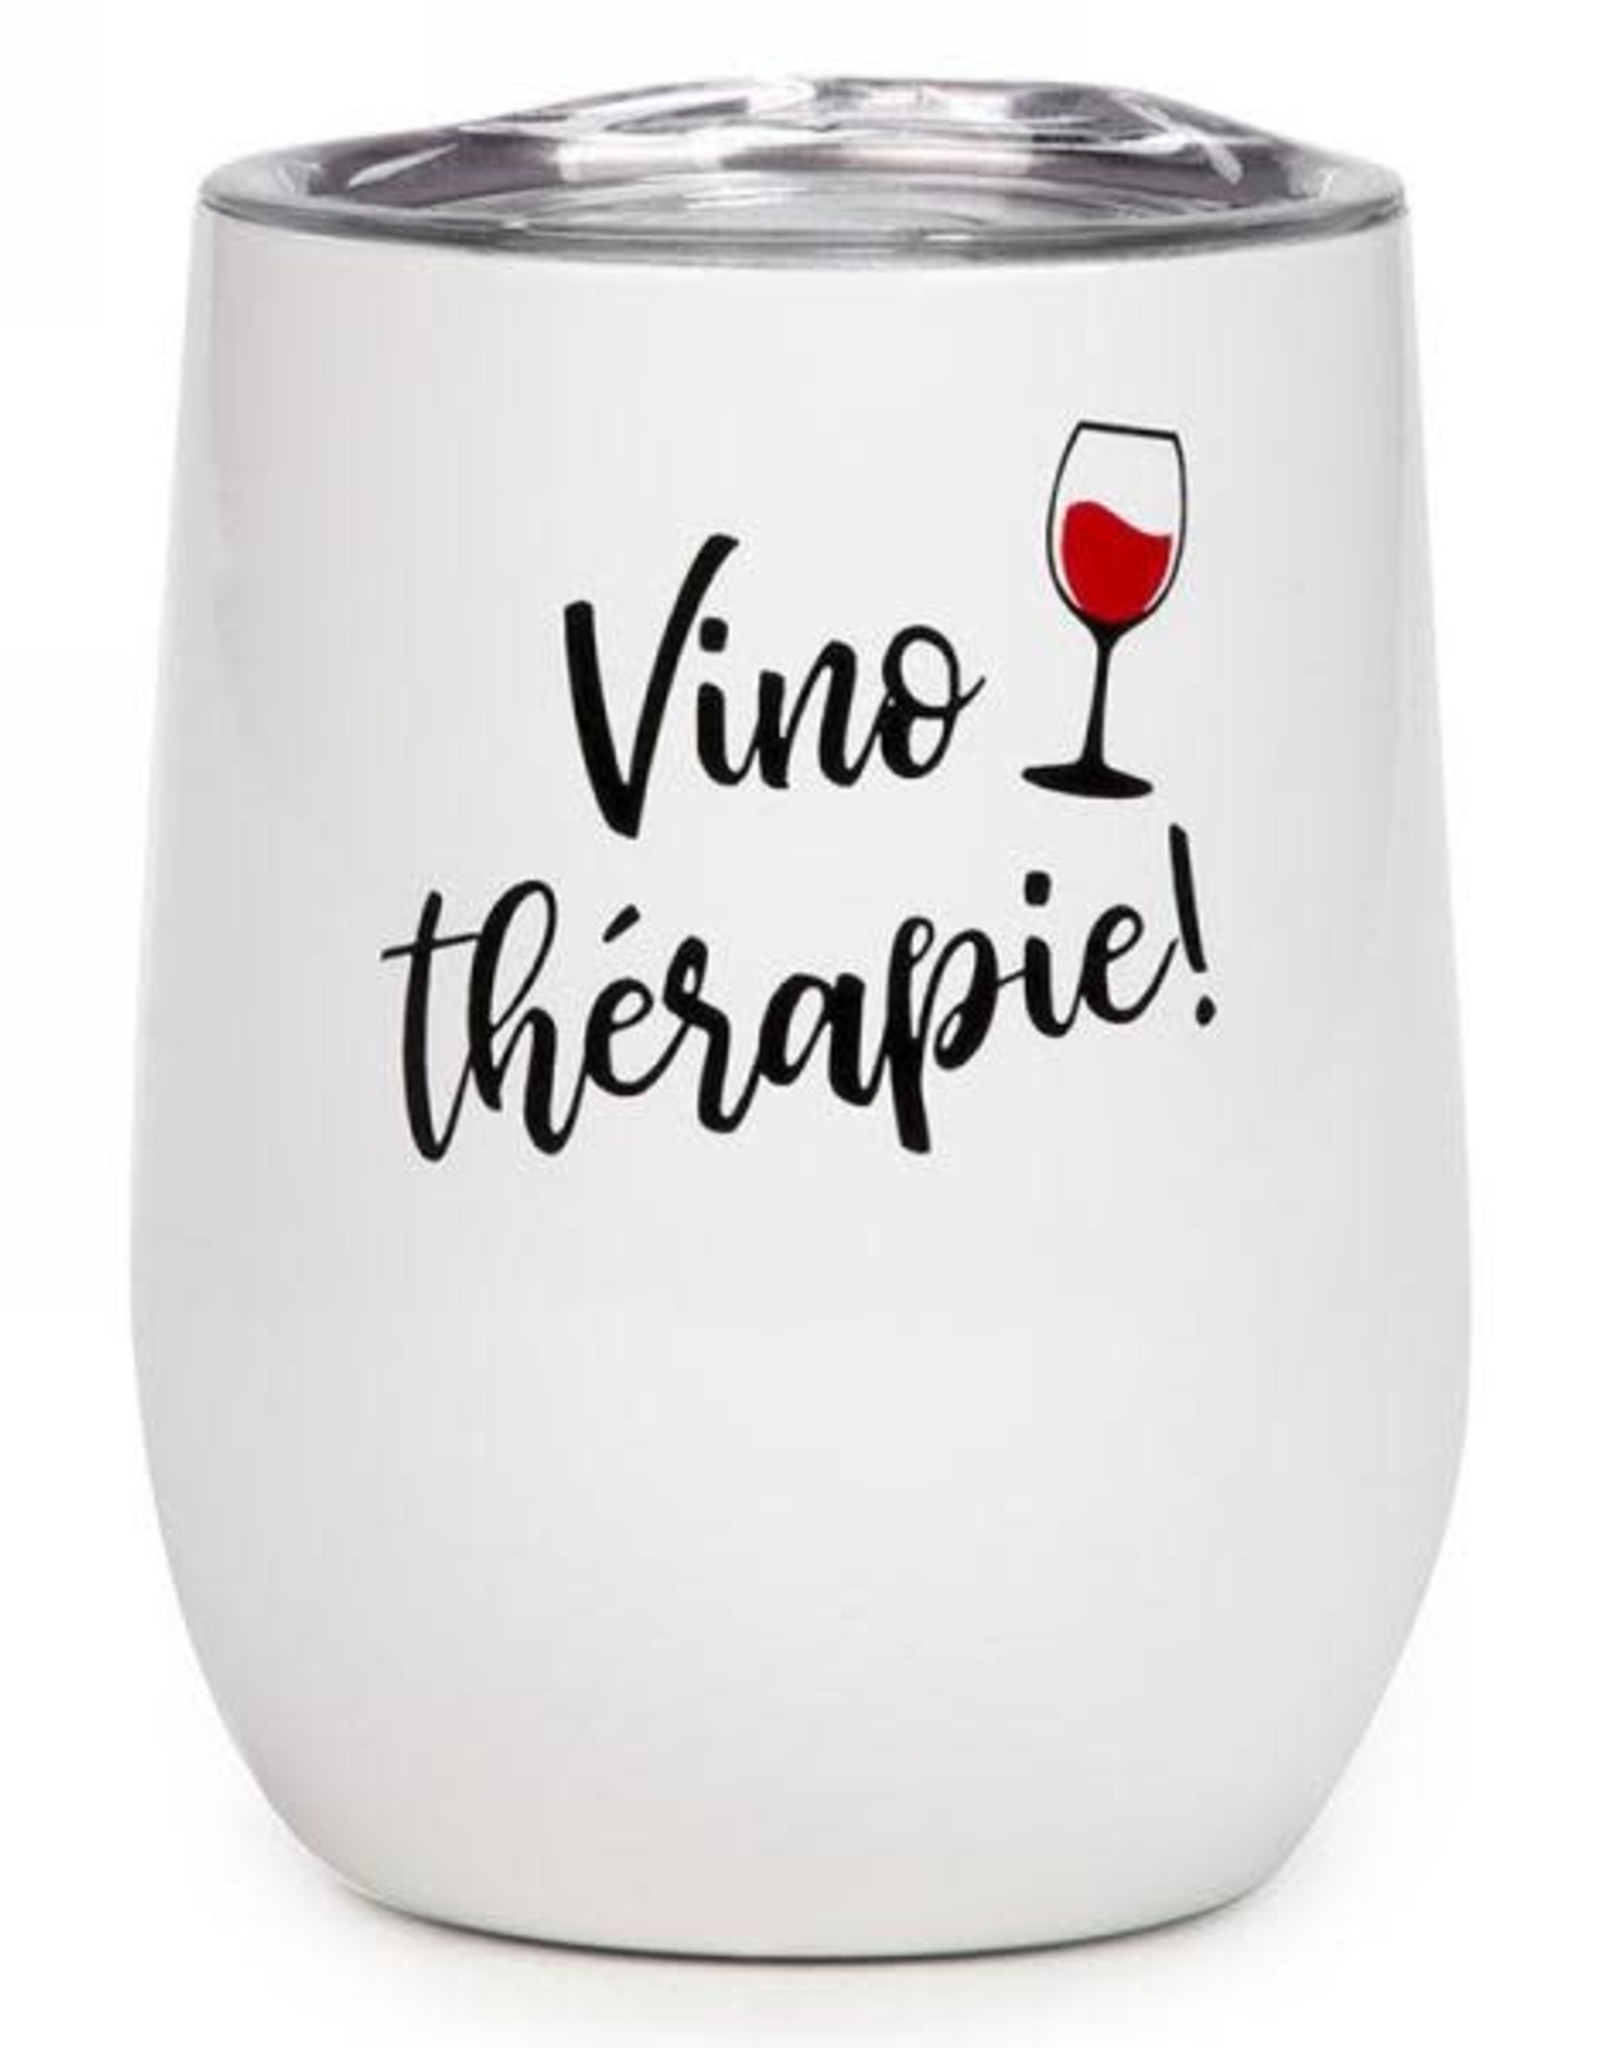 Verre thermos - Vino thérapie